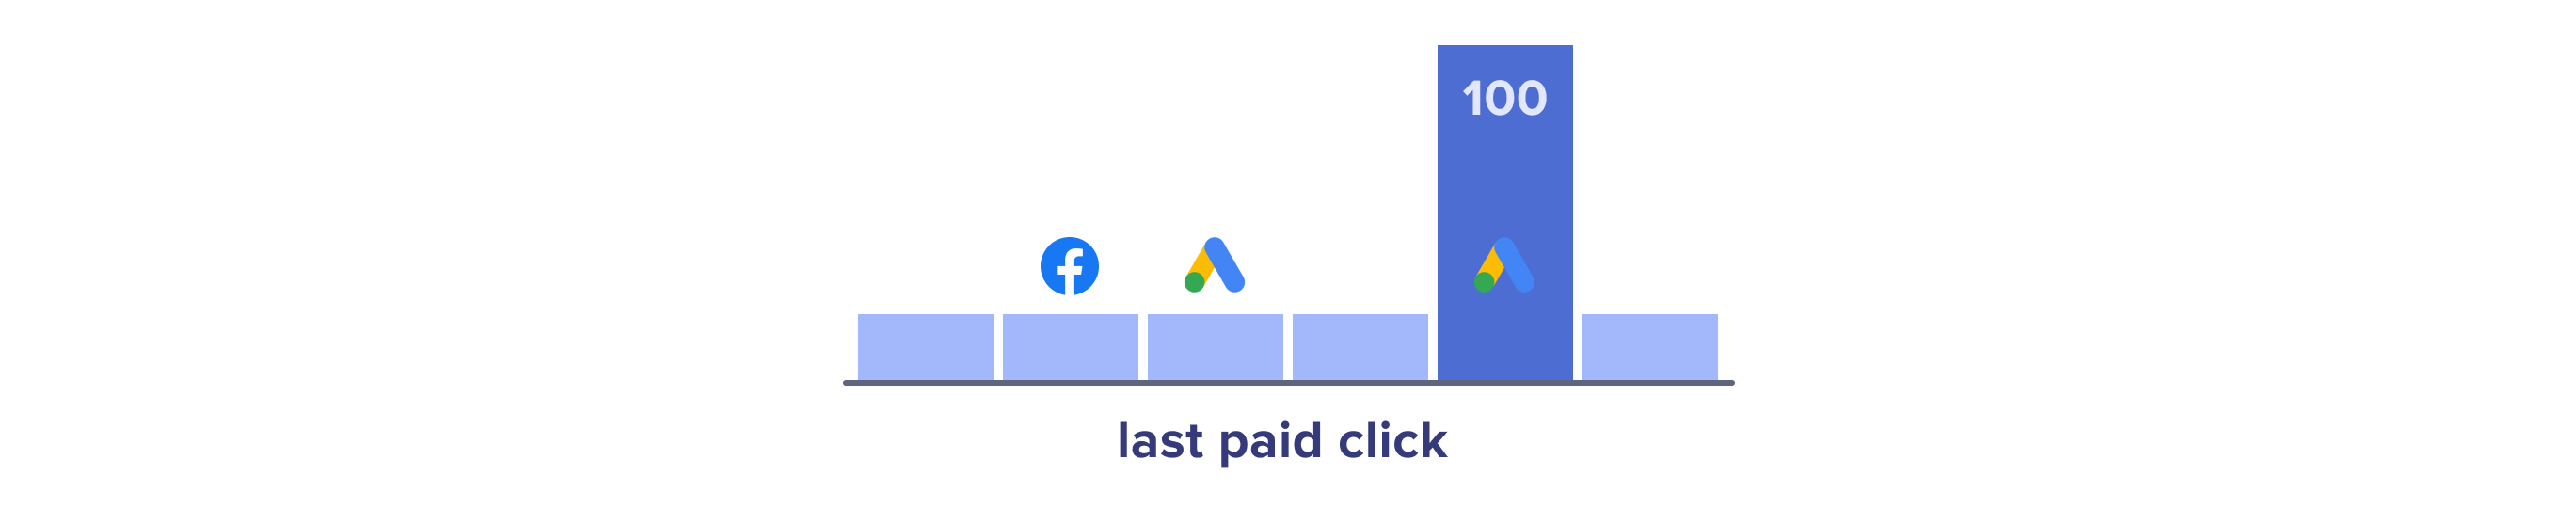 Last paid click attribution model